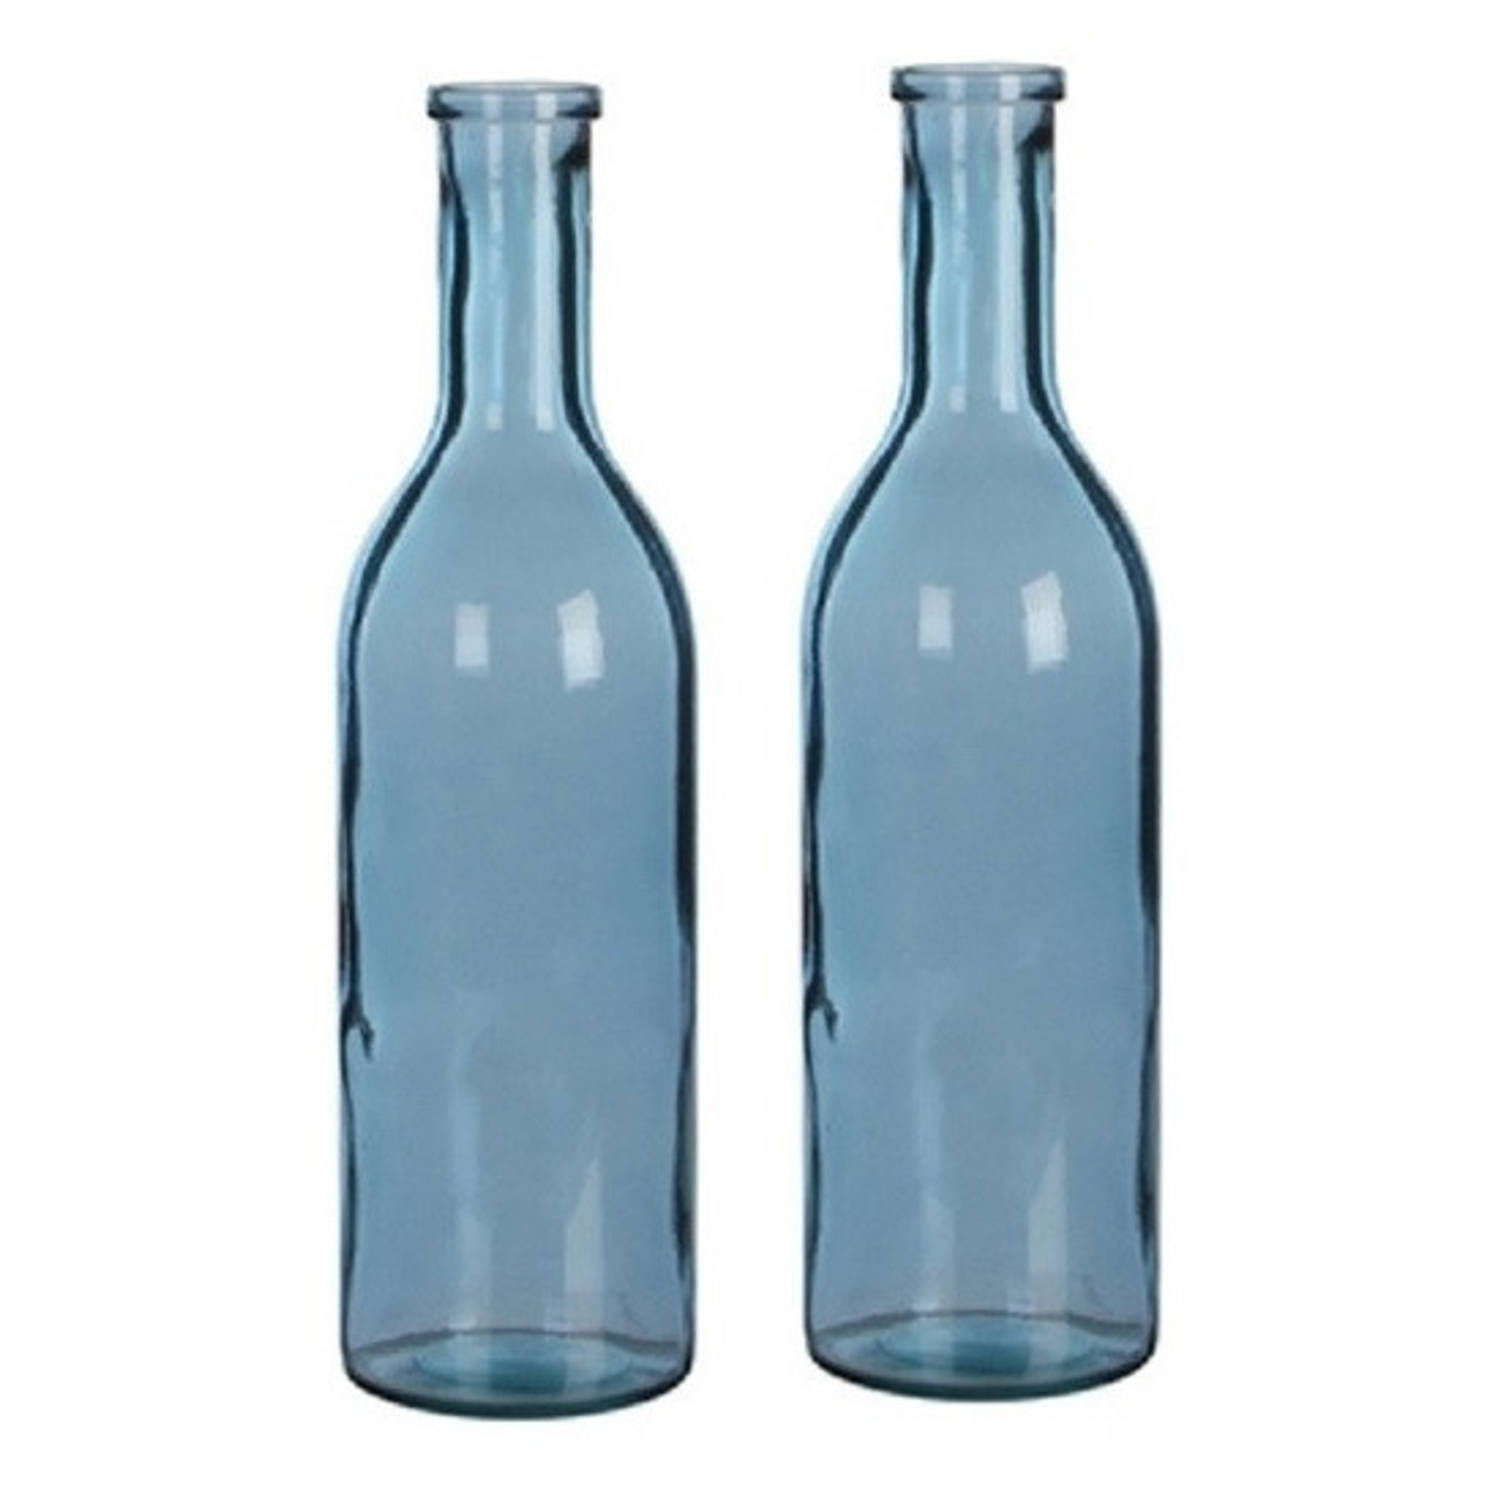 Slink verwennen Hesje 2x Glazen fles / vaas blauw 50 x 15 cm - Vazen | Blokker